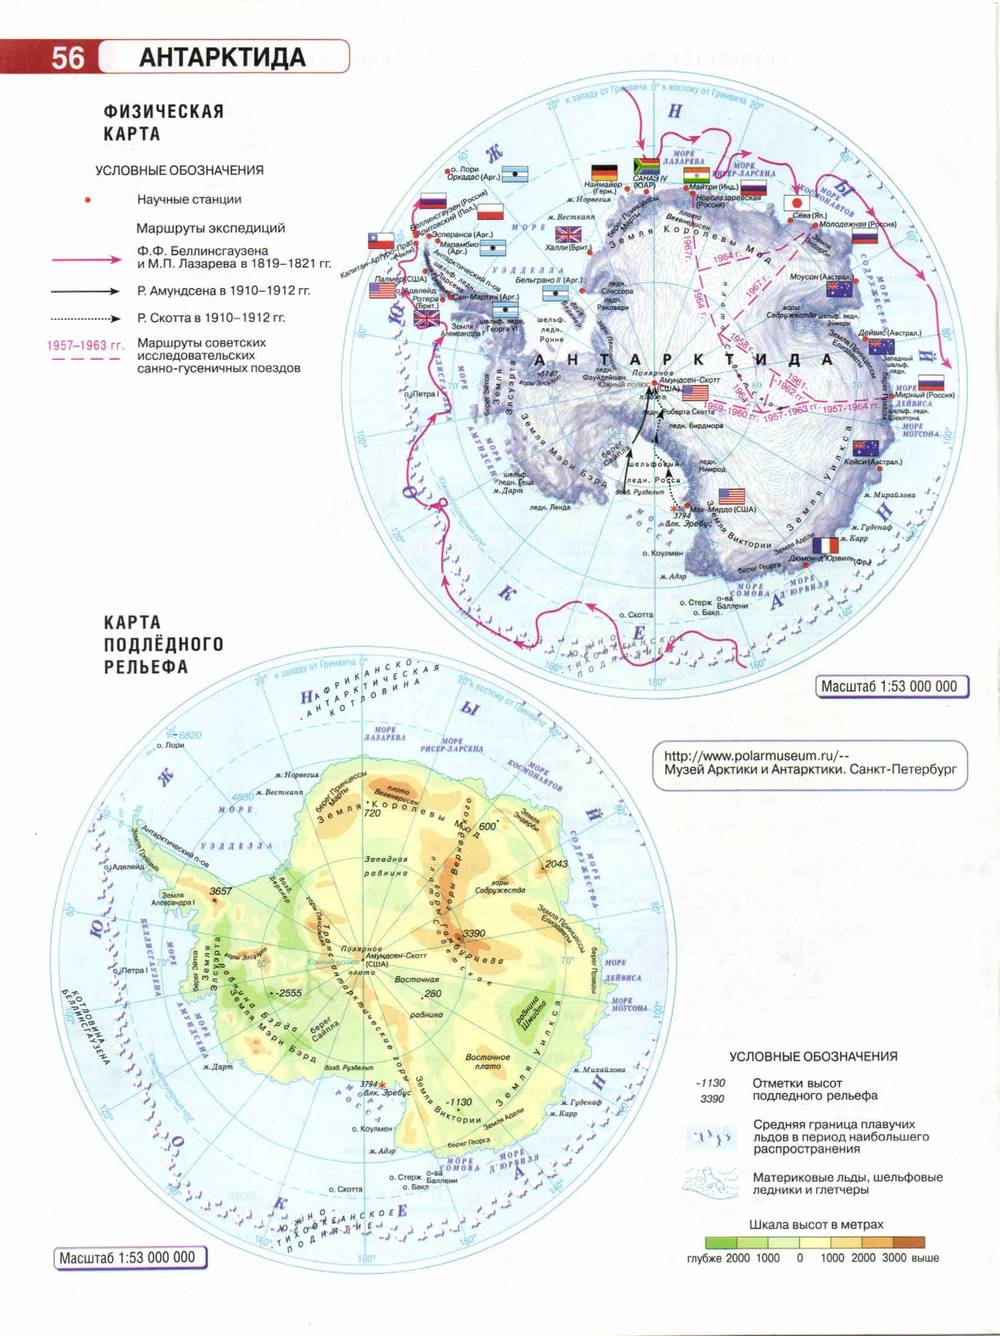 Контурная карта антарктиды 7 класс готовая. Физическая карта Антарктиды 7 класс атлас география. Антарктида контурная карта 7 класс Антарктида .физическая карта. Антарктида на карте 7 класс география. Физическая карта Антарктиды 7 класс атлас.